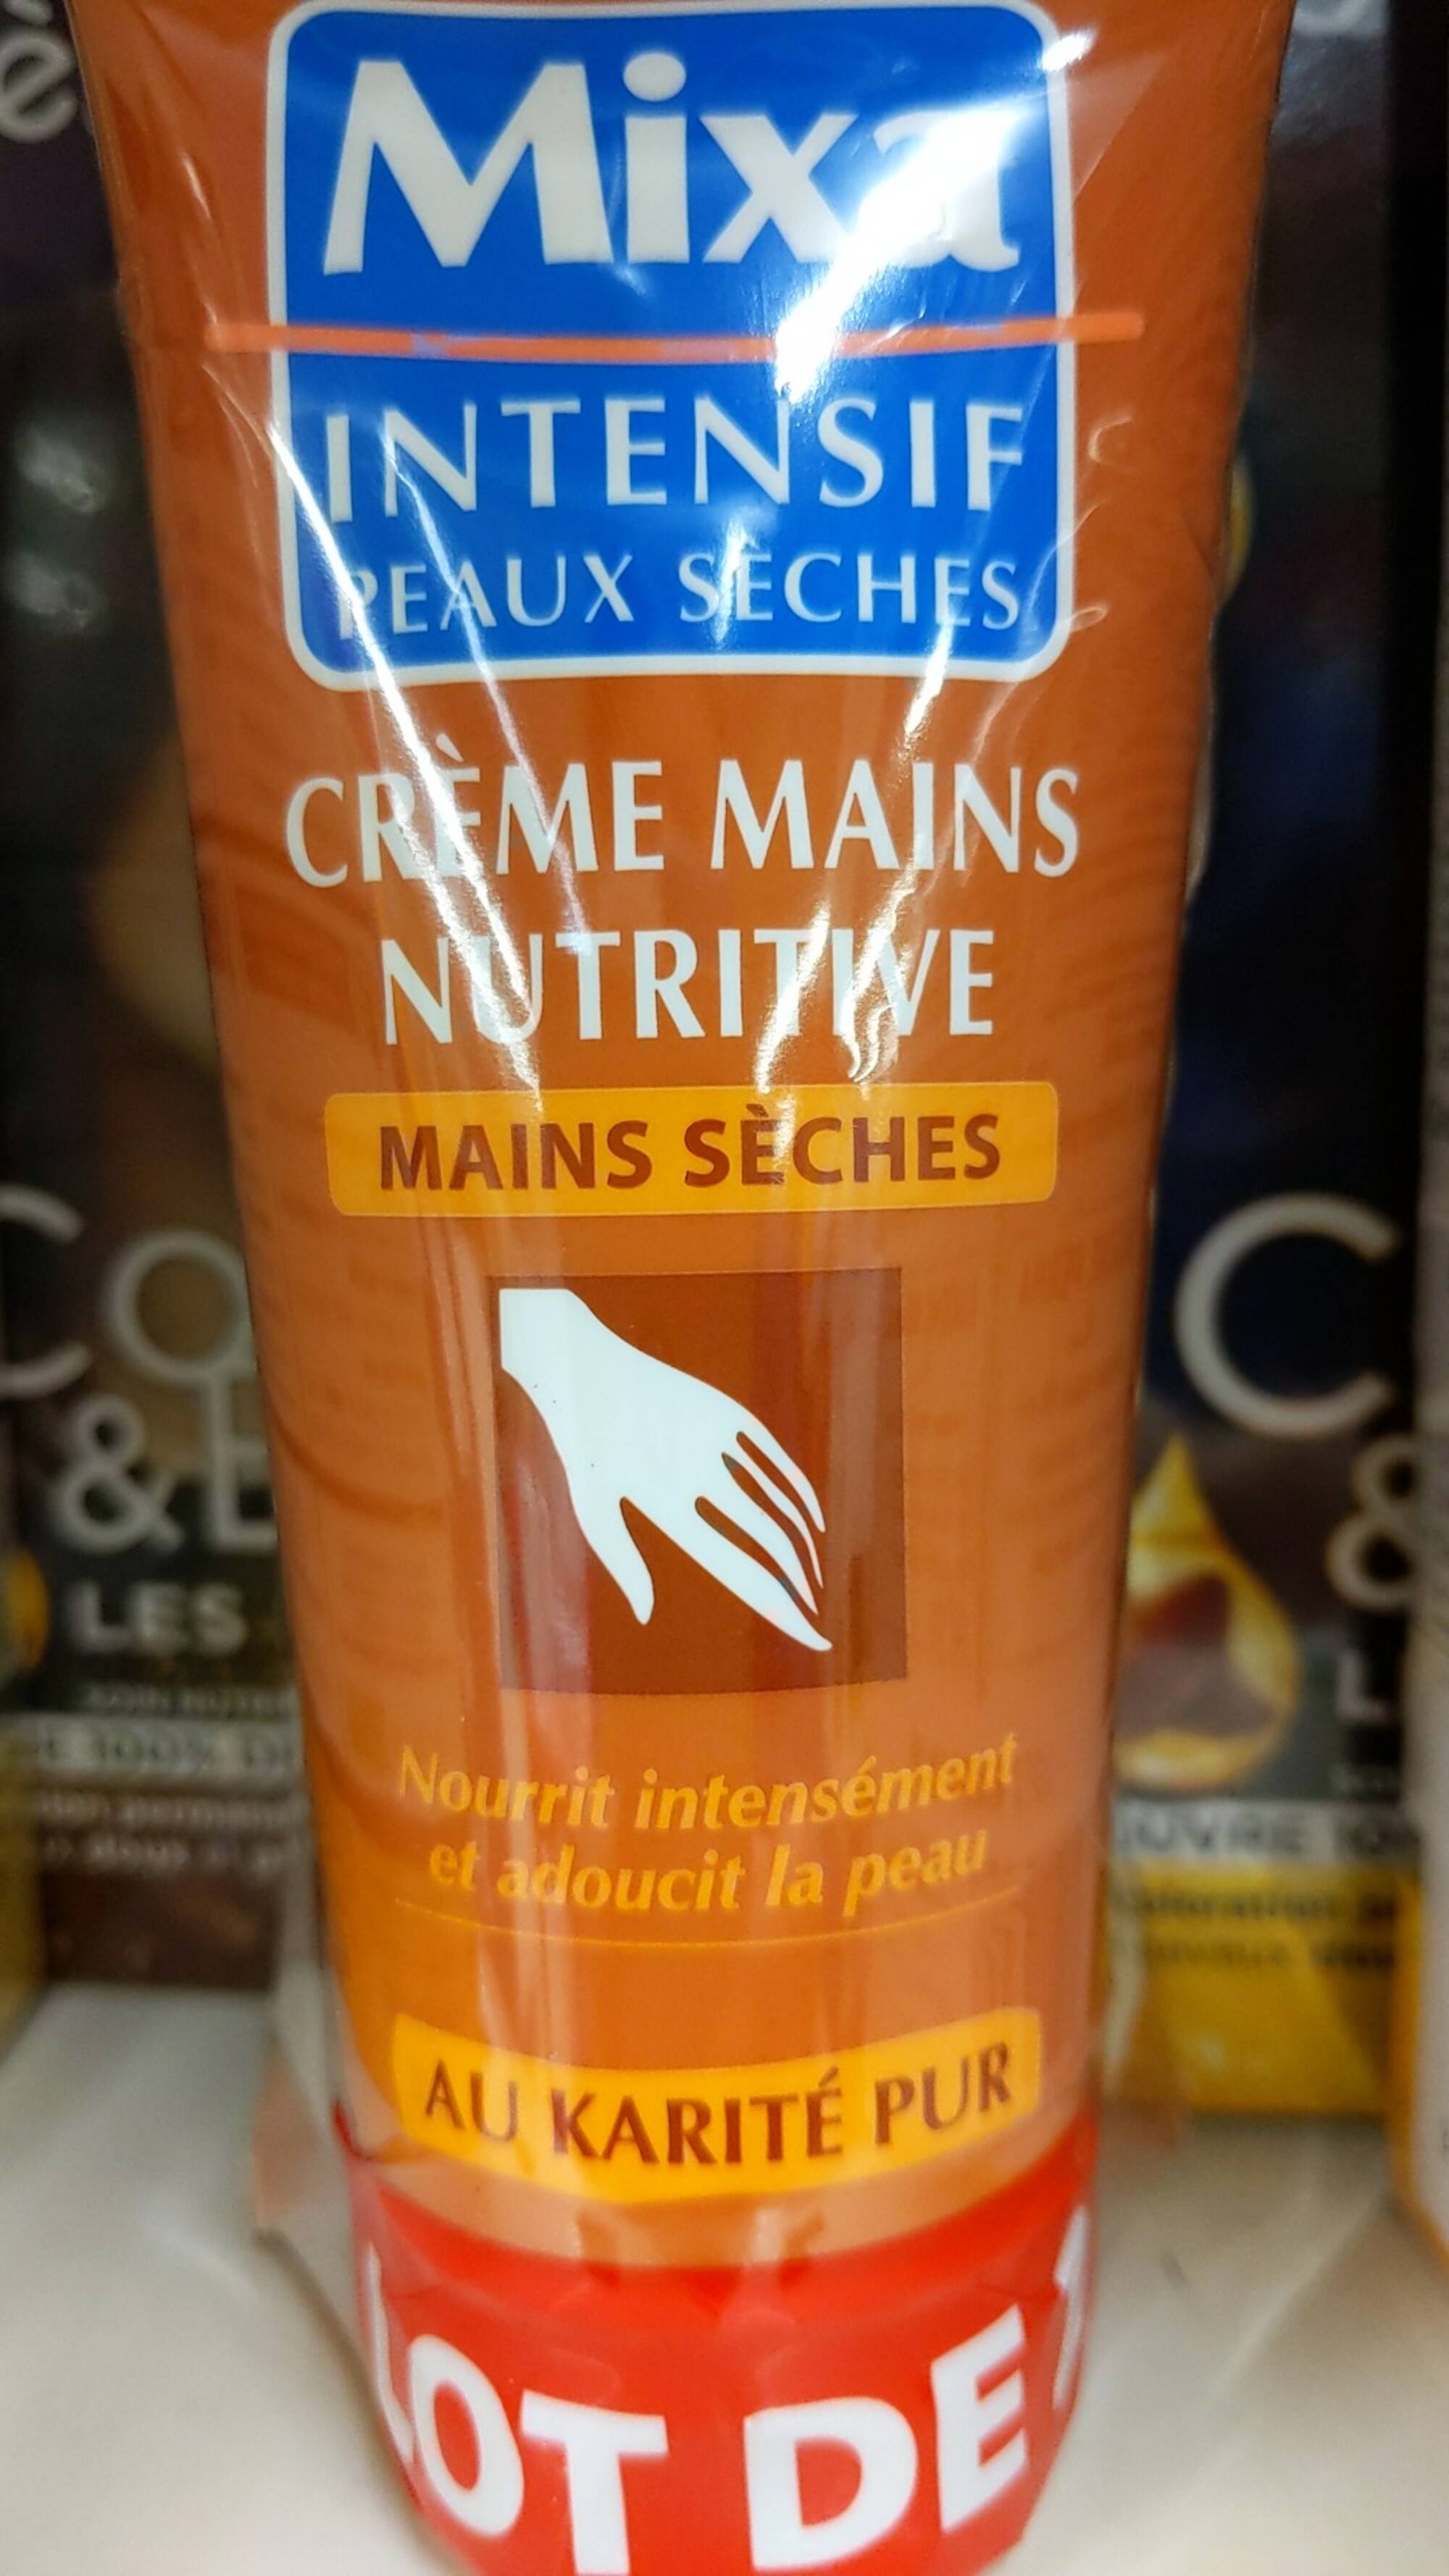 Mixa Crème Mains Karité 100ml